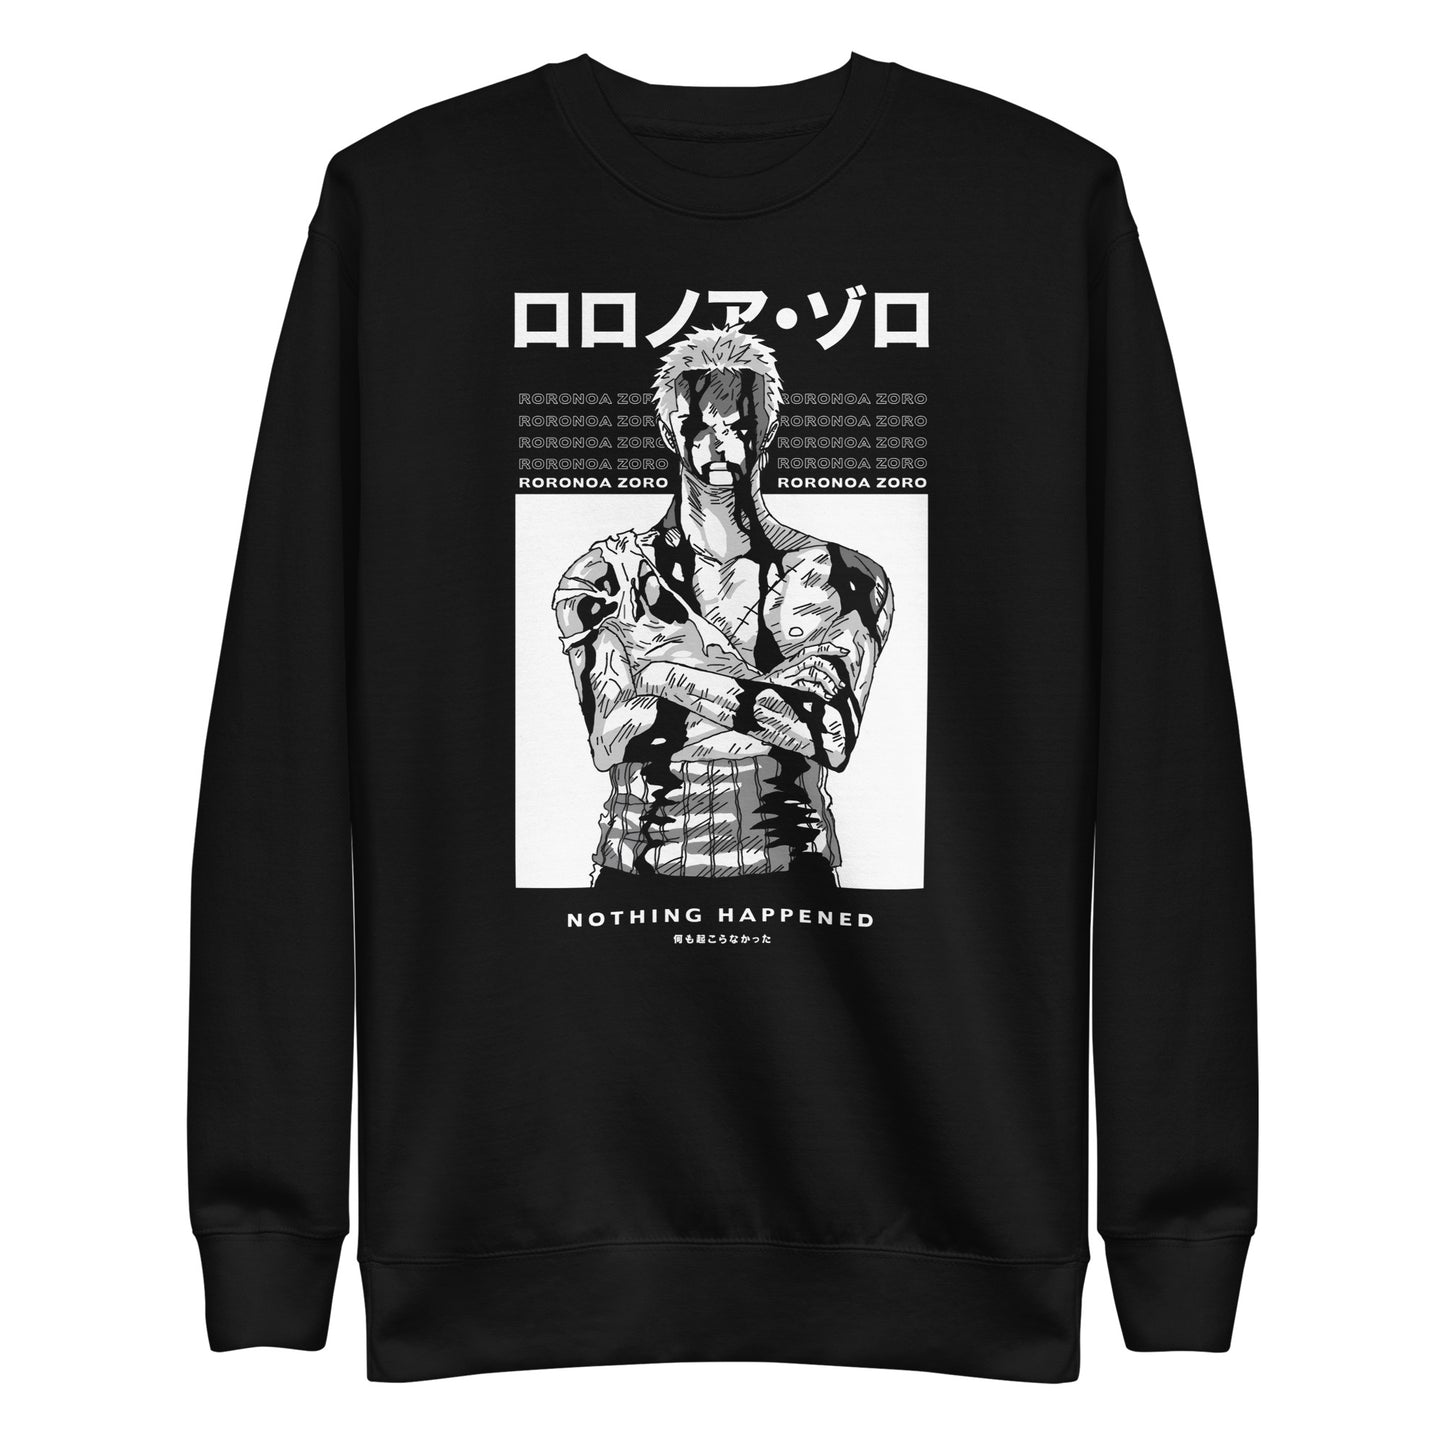 Zoro (NOTHING HAPPENED) Sweatshirt